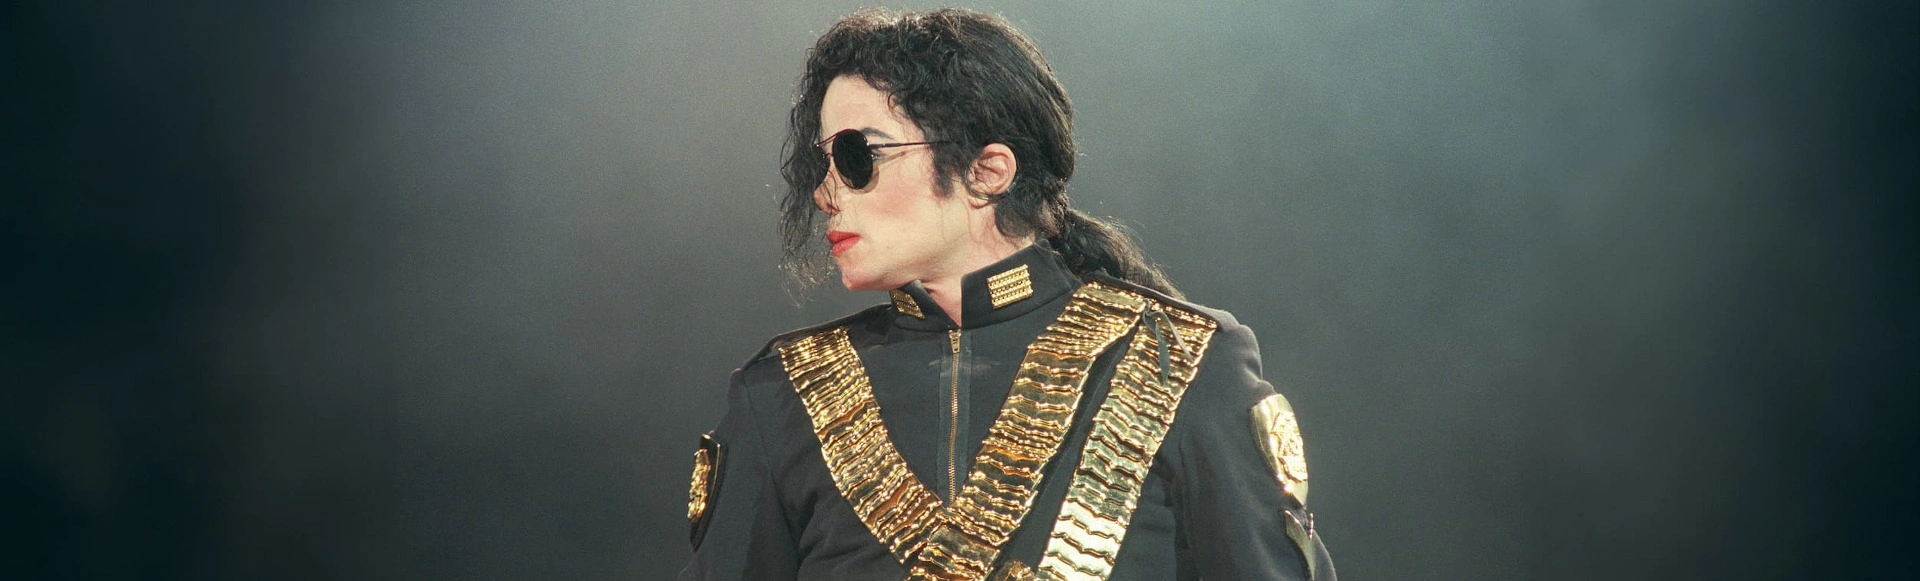 Michael - The Magic of Michael Jackson